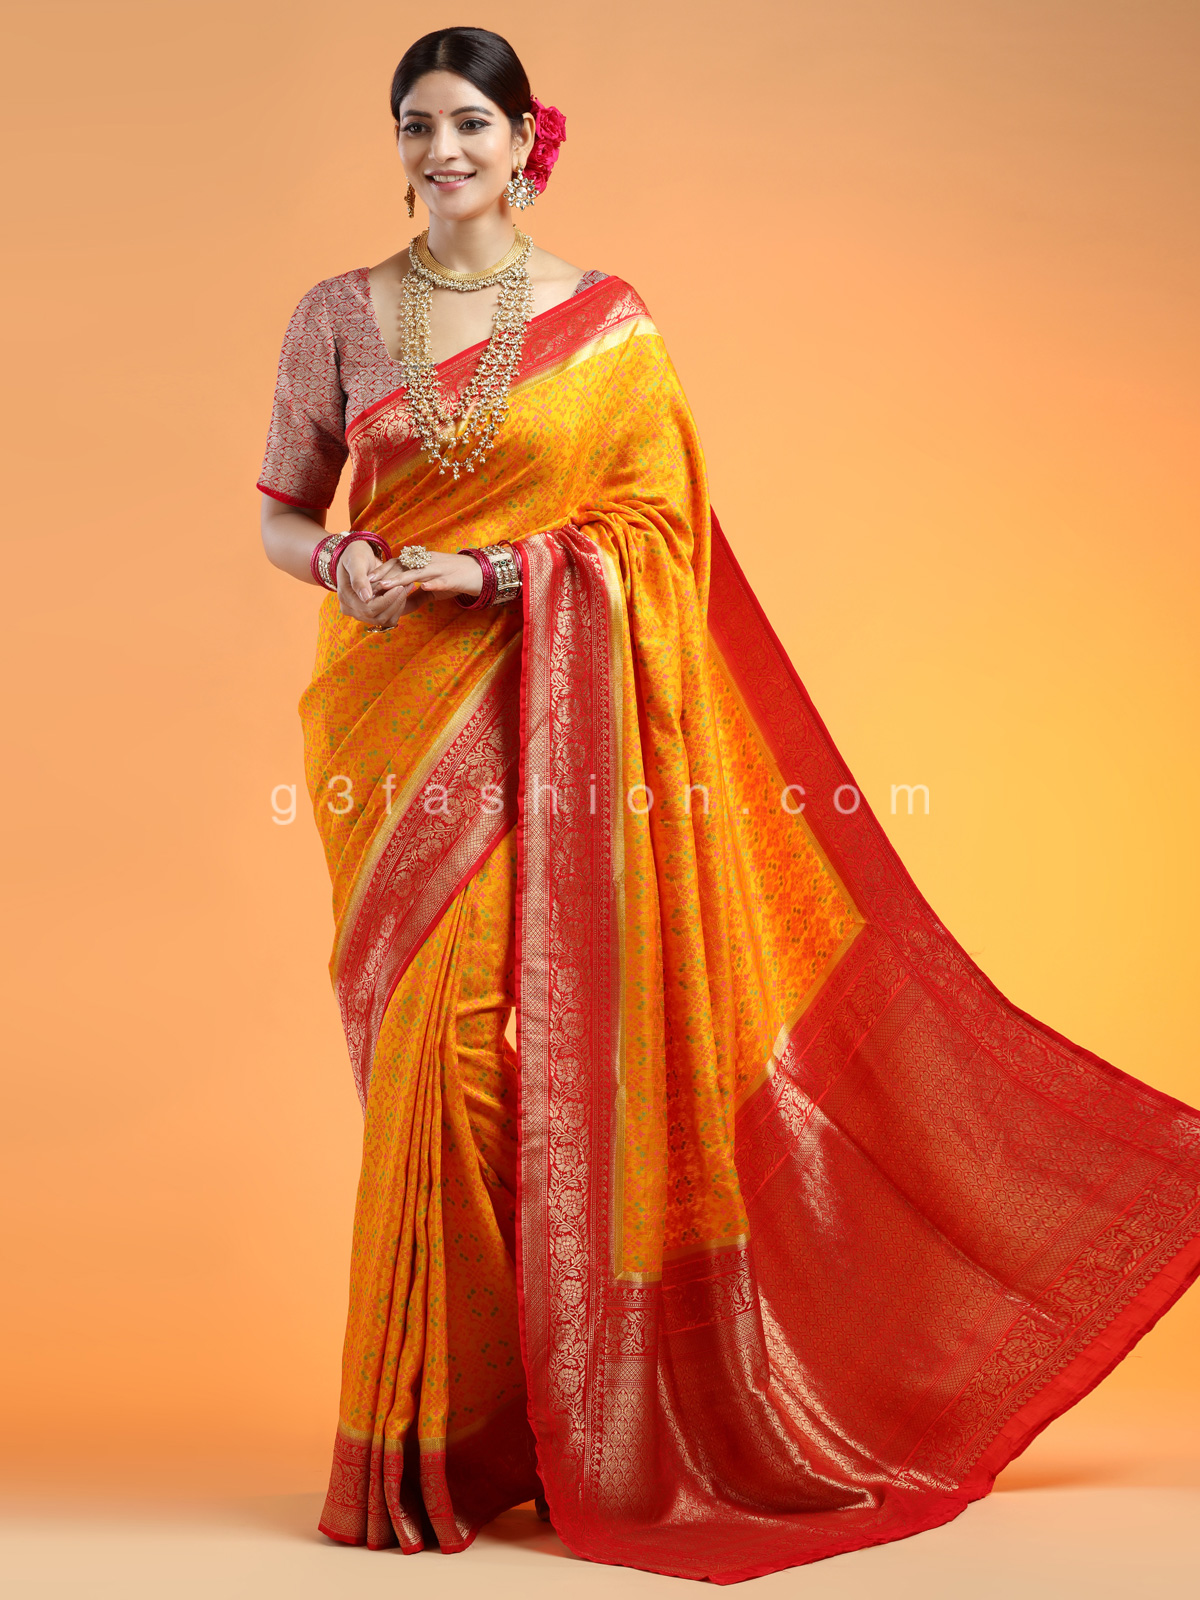 Bright yellow extravagant wedding look saree in silk - G3-WSA51750